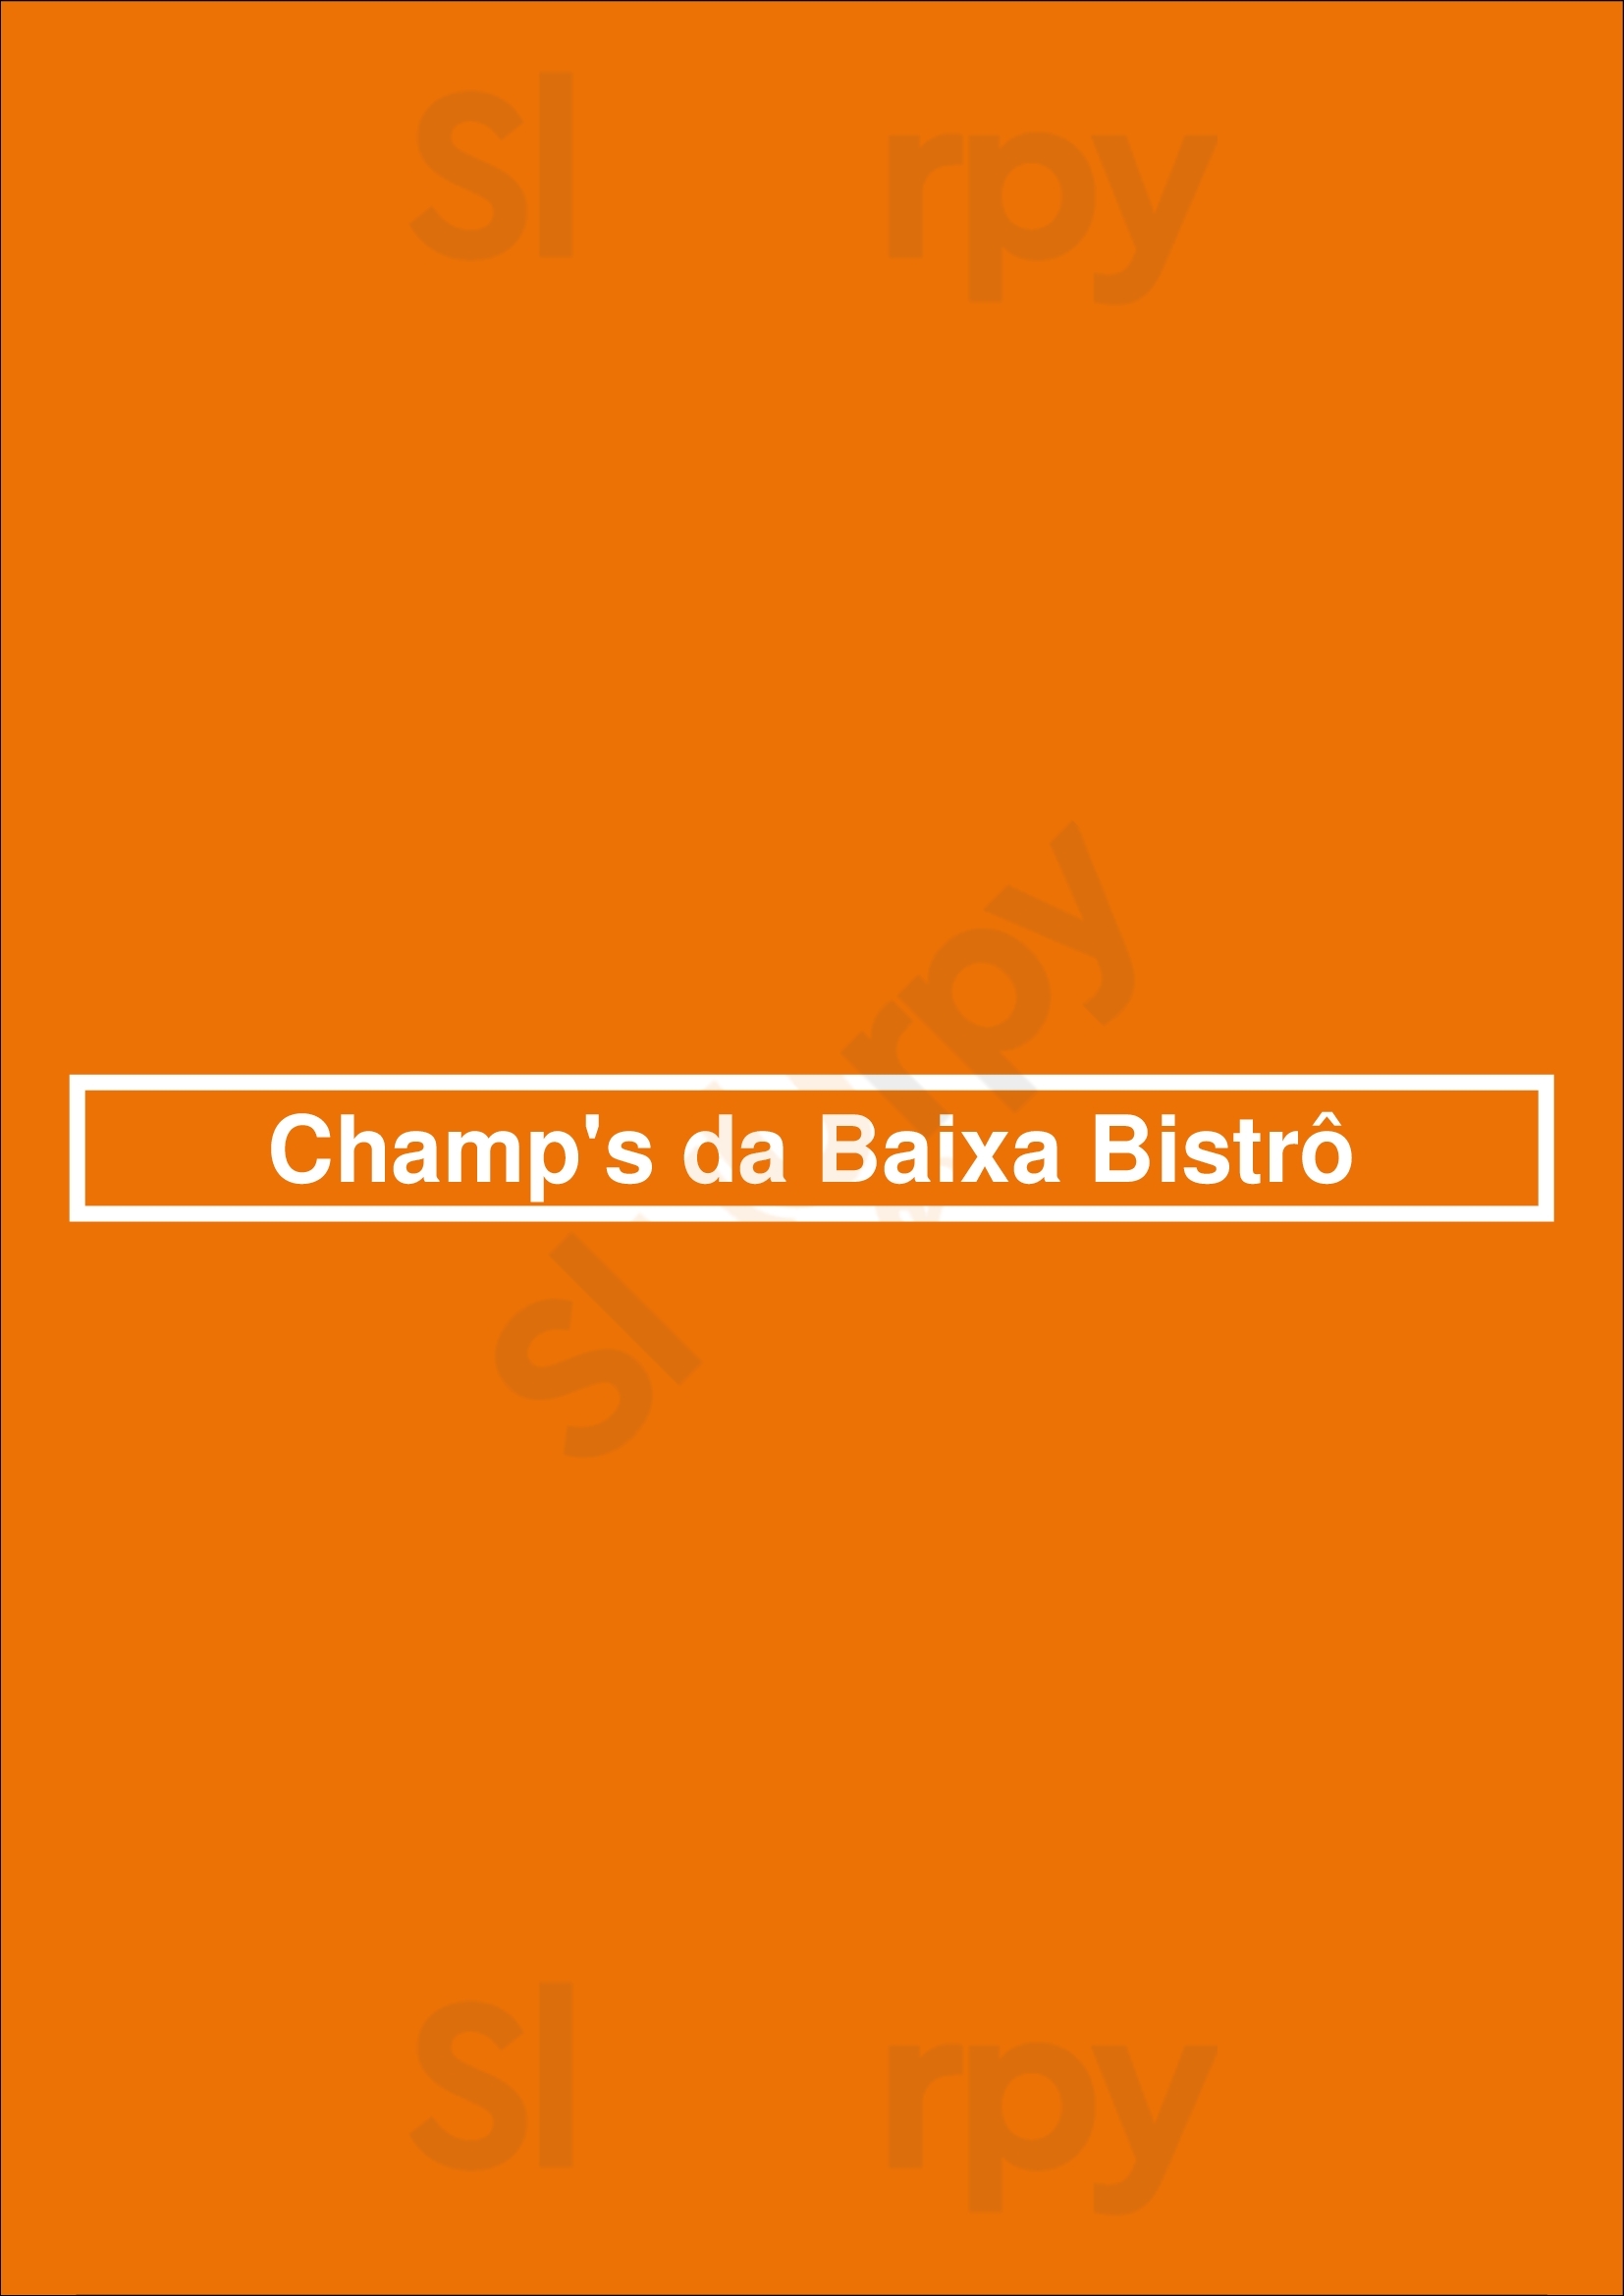 Champ's Da Baixa Bistrô Porto Menu - 1